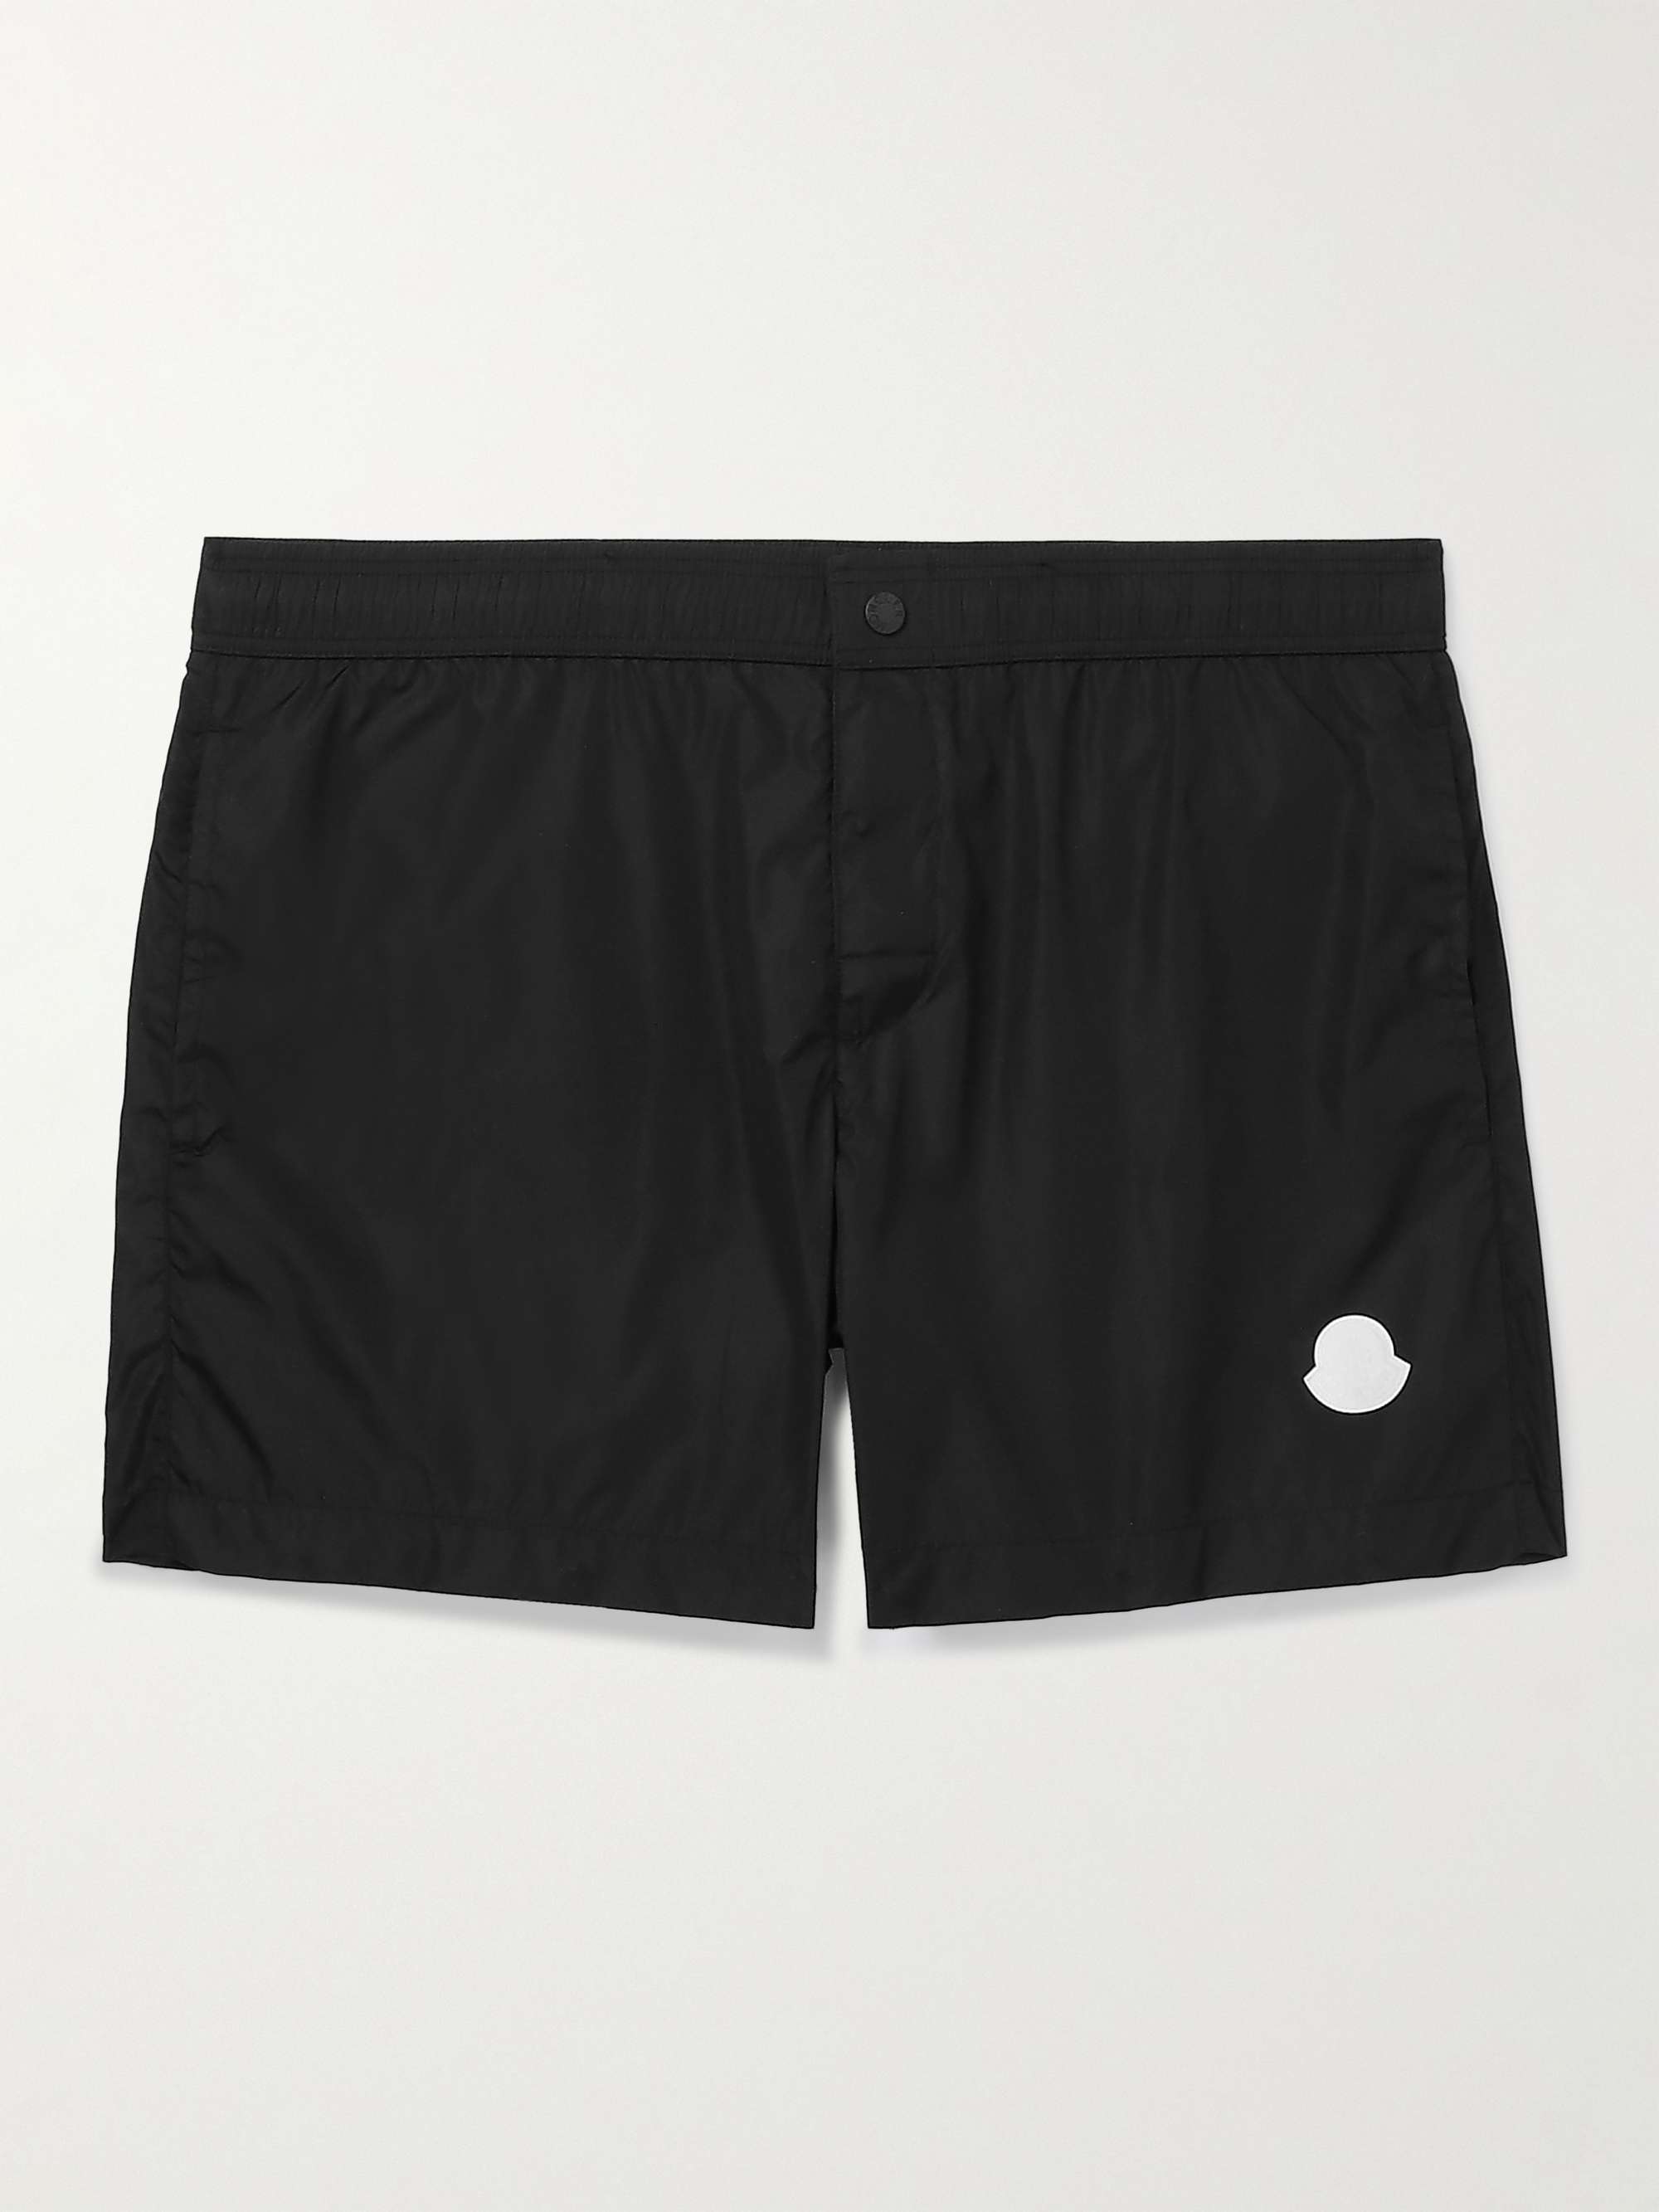 MONCLER Slim-Fit Mid-Length Logo-Appliquéd Swim Shorts for Men | MR PORTER